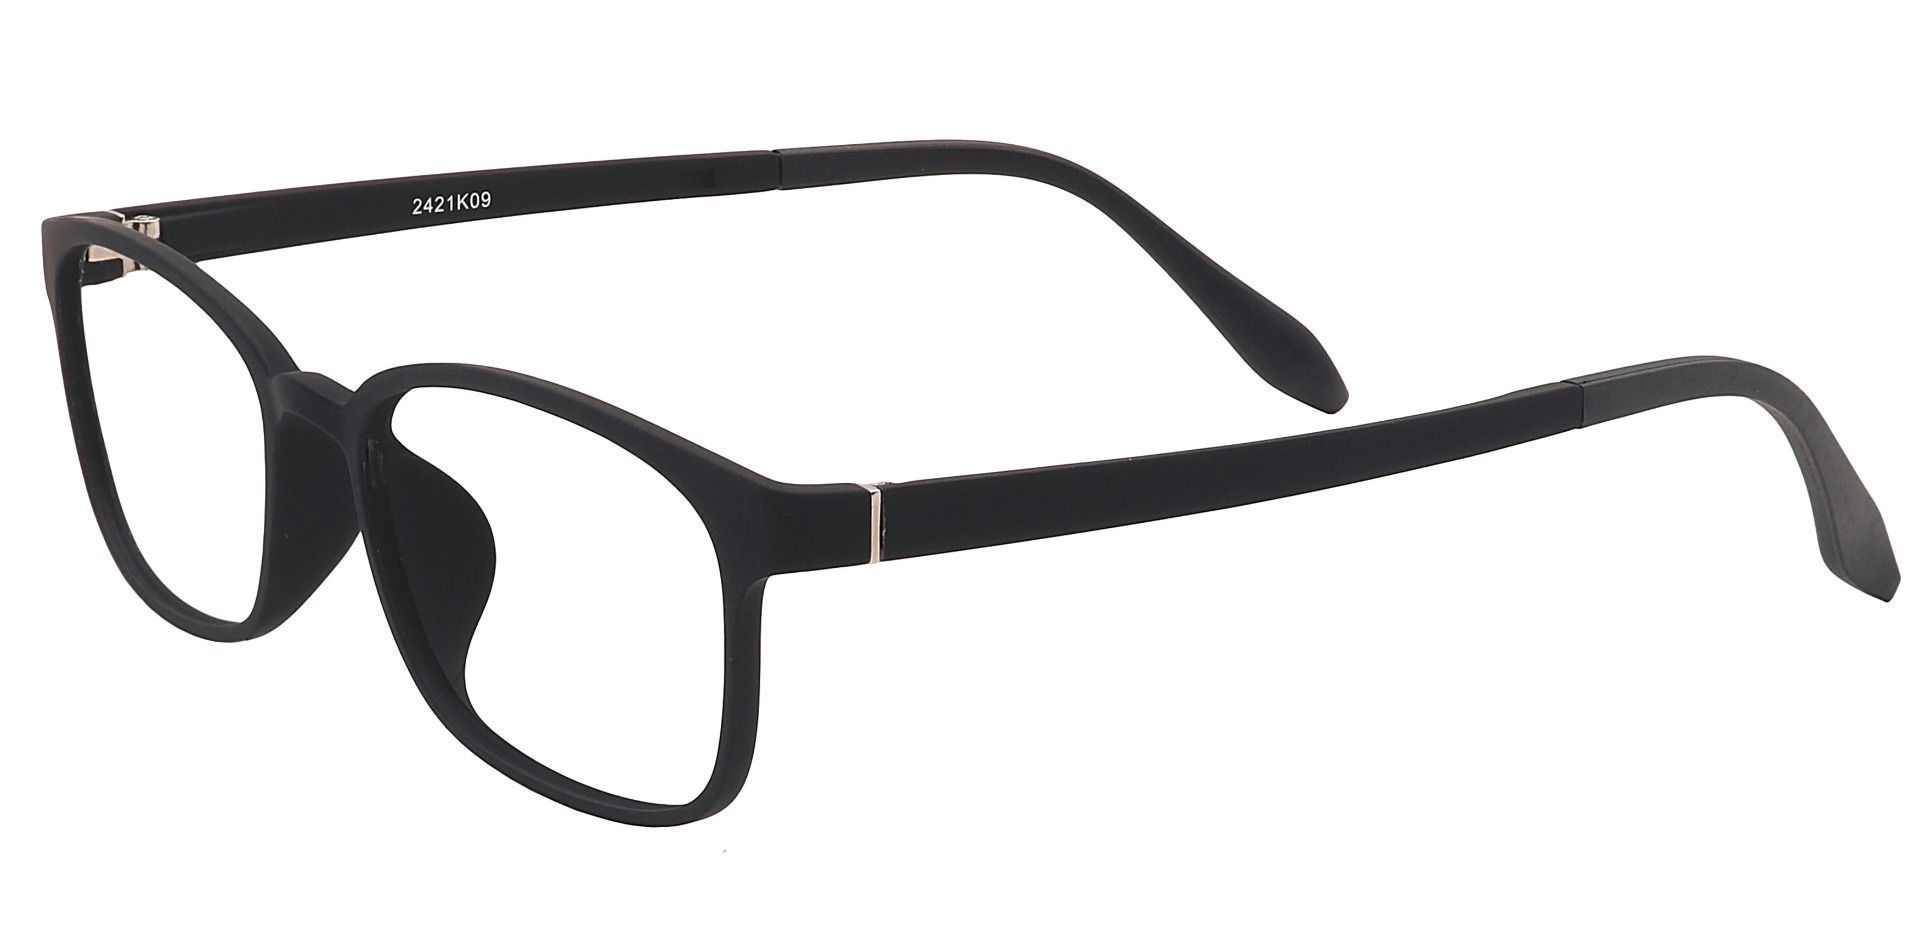 Mercer Rectangle Progressive Glasses - Matte Black